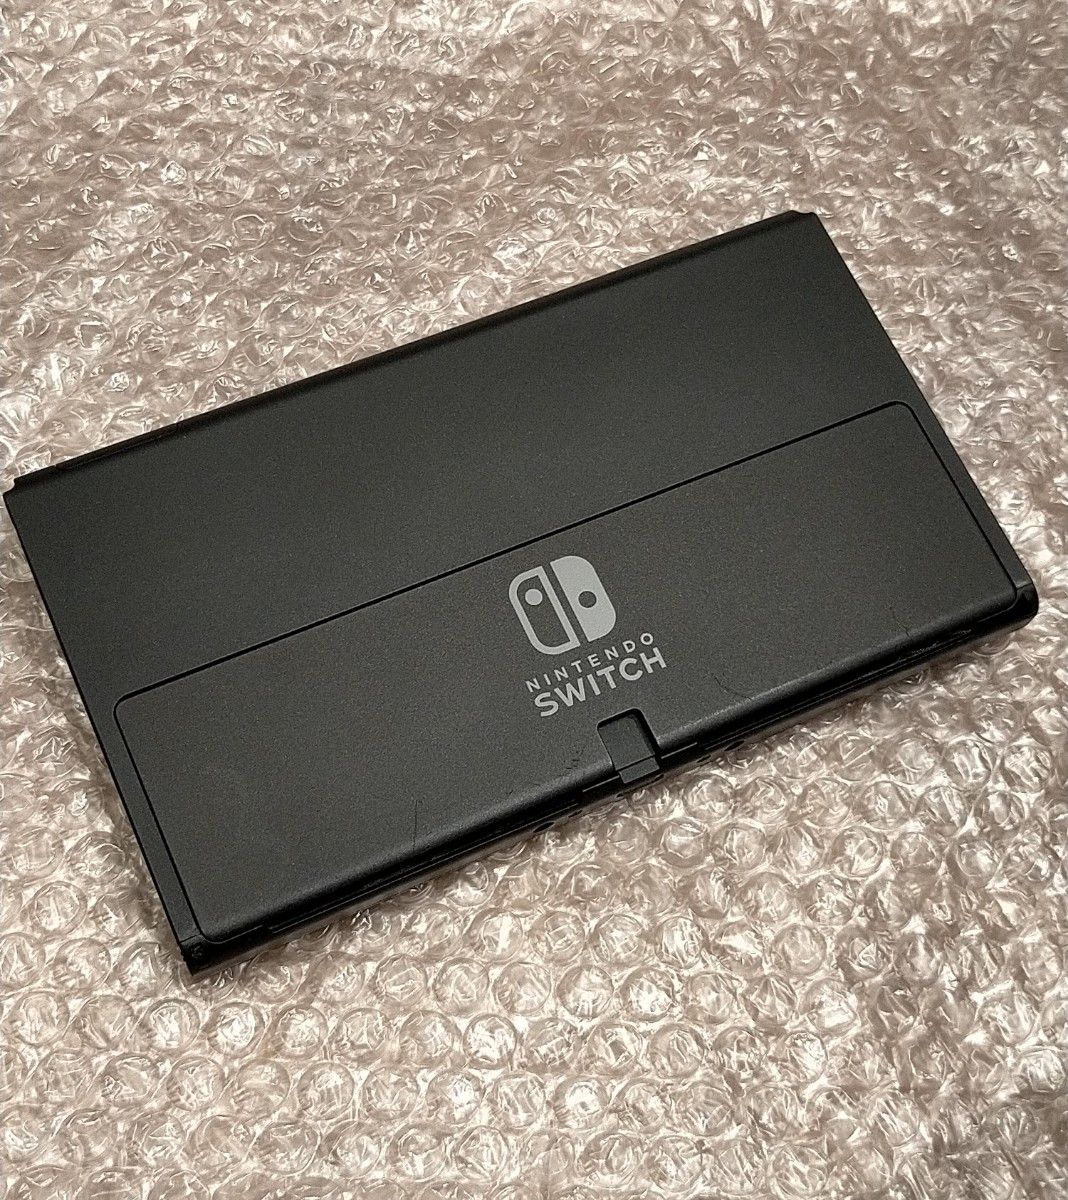 Nintendo Switch スイッチ 有機ELモデル本体のみ | labiela.com